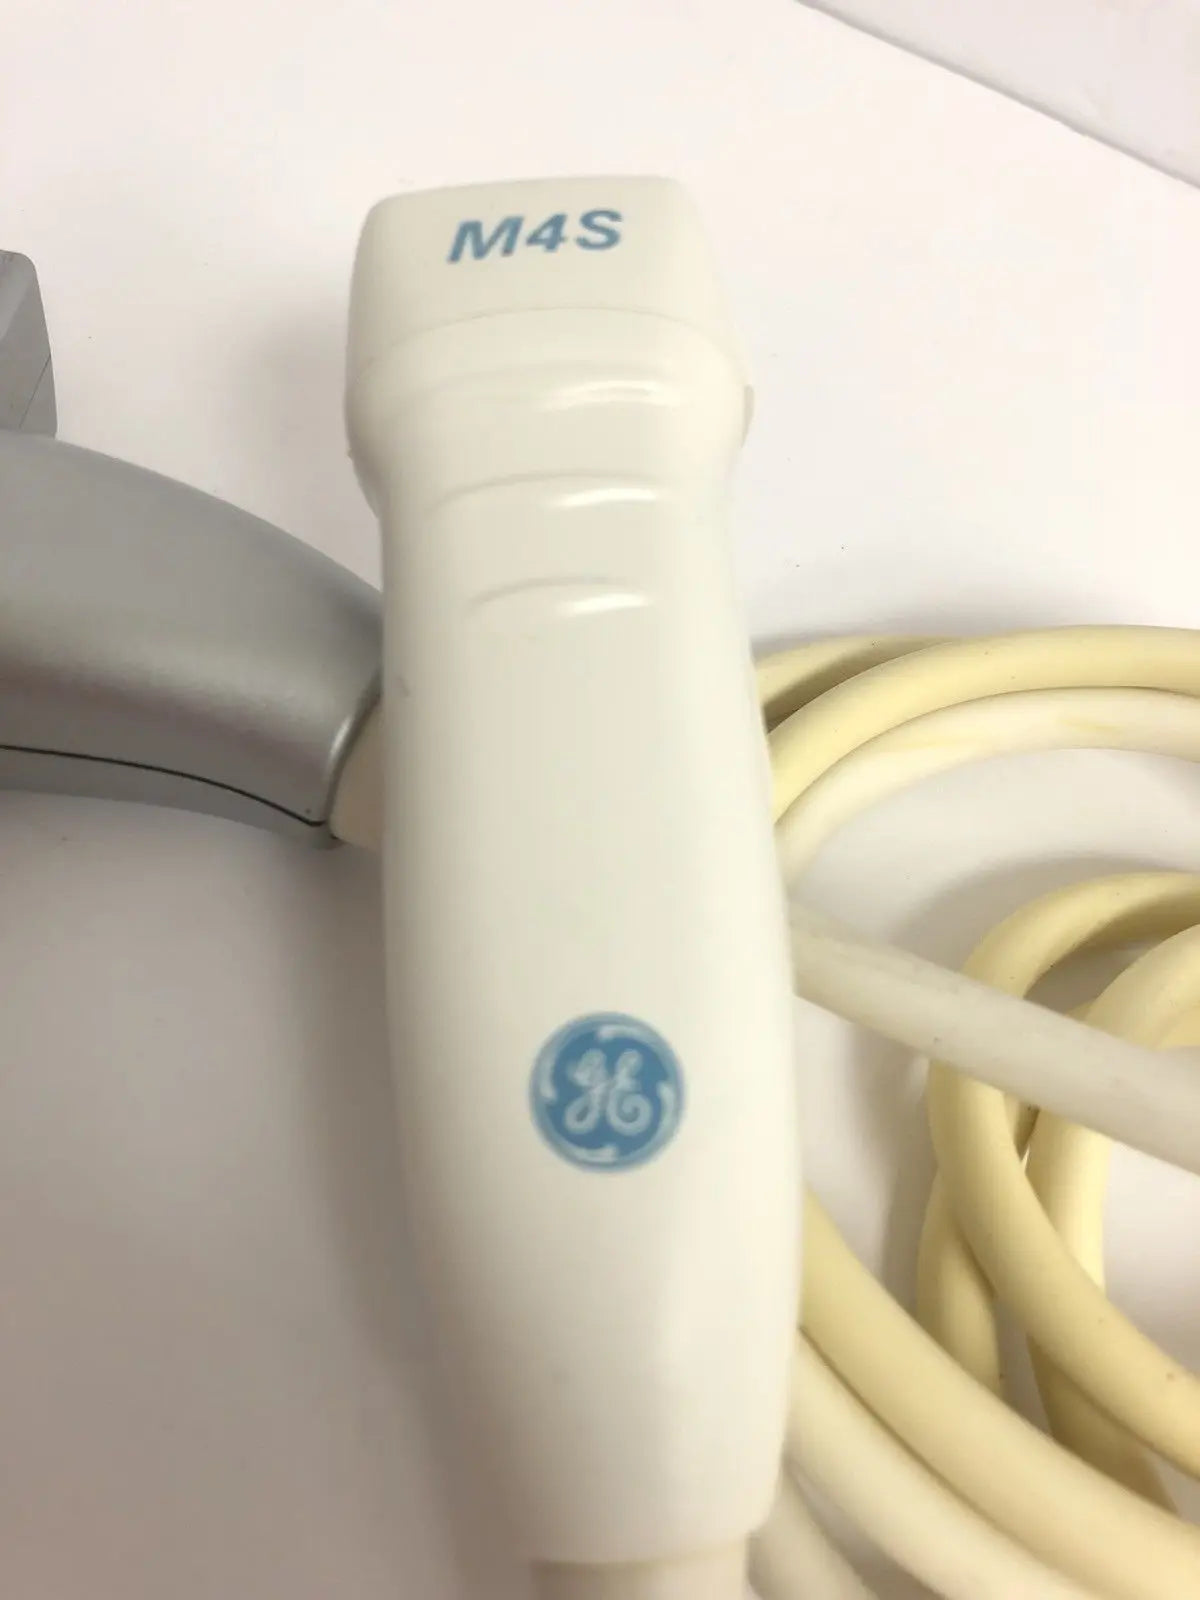 GE M4S-RS Ultrasound Probe / Transducer DOM-September 2012